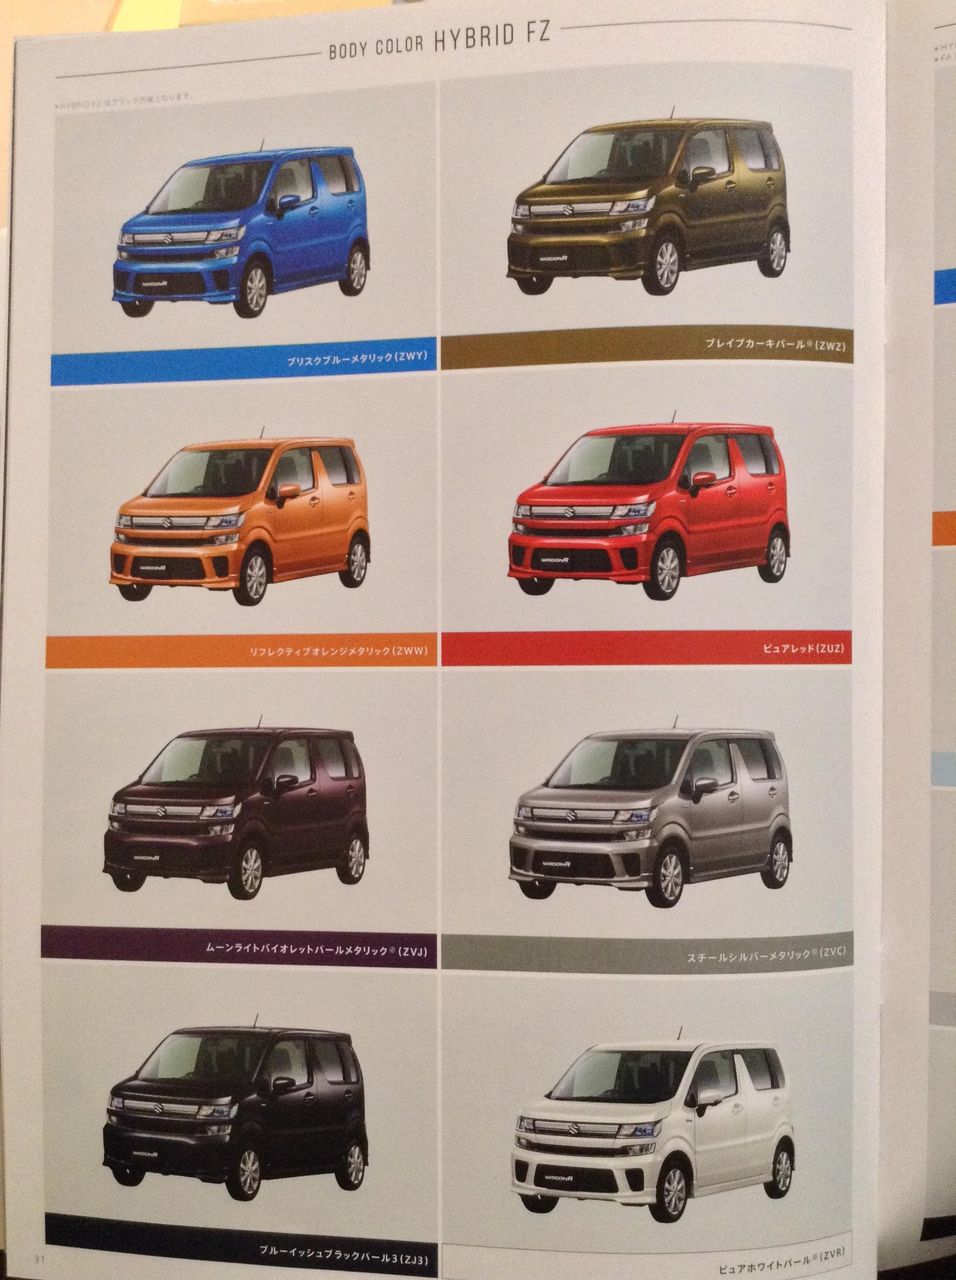 Next-gen-Suzuki-Wagon-R-hybrid-fz-brochure-leaked-colors